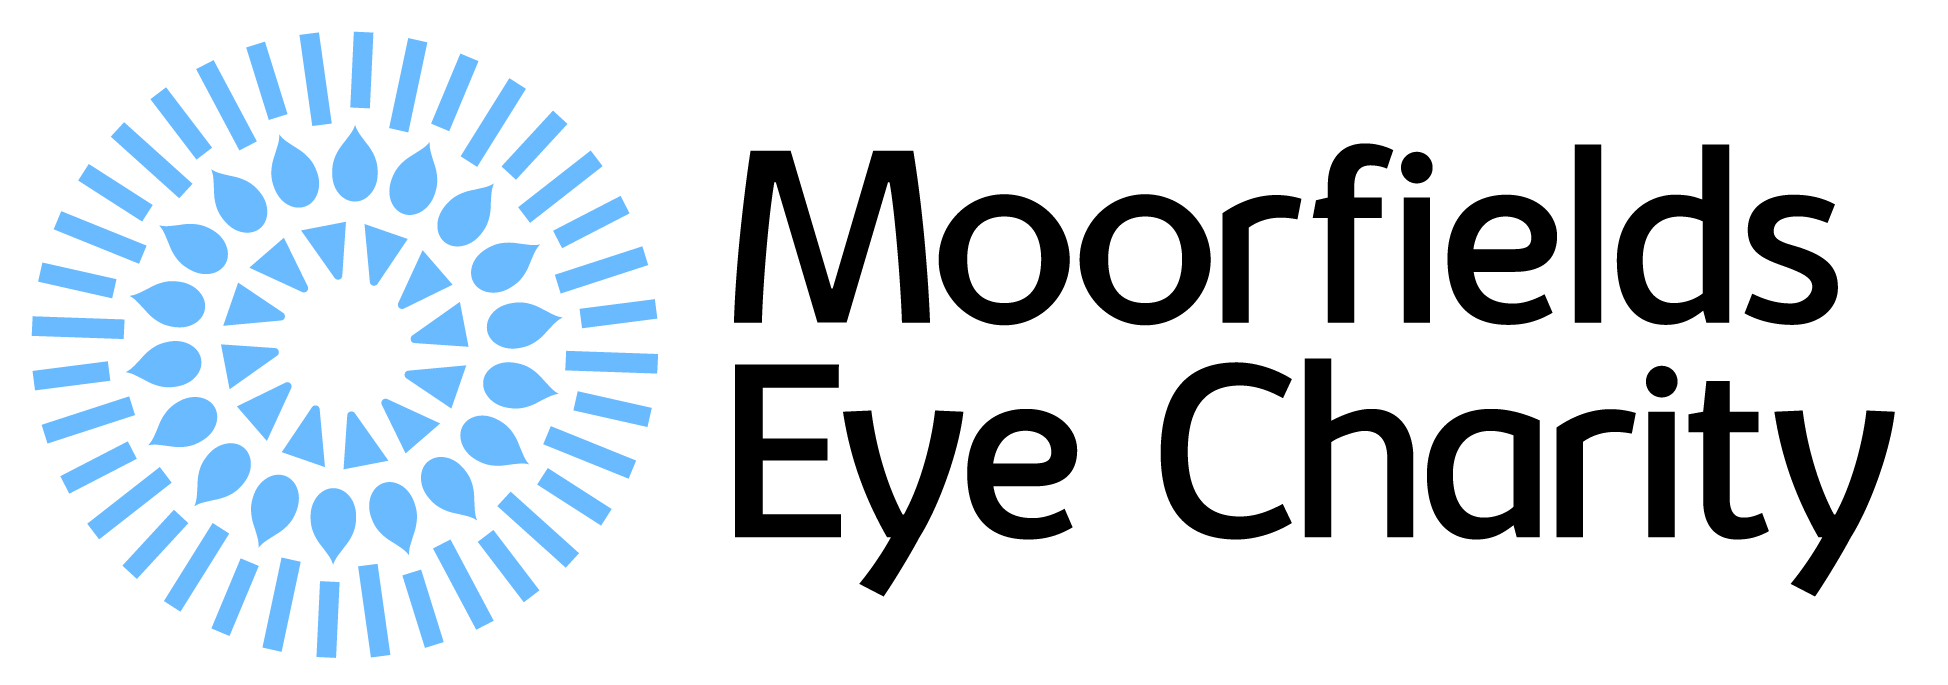 Moorfields Eye Charity logo